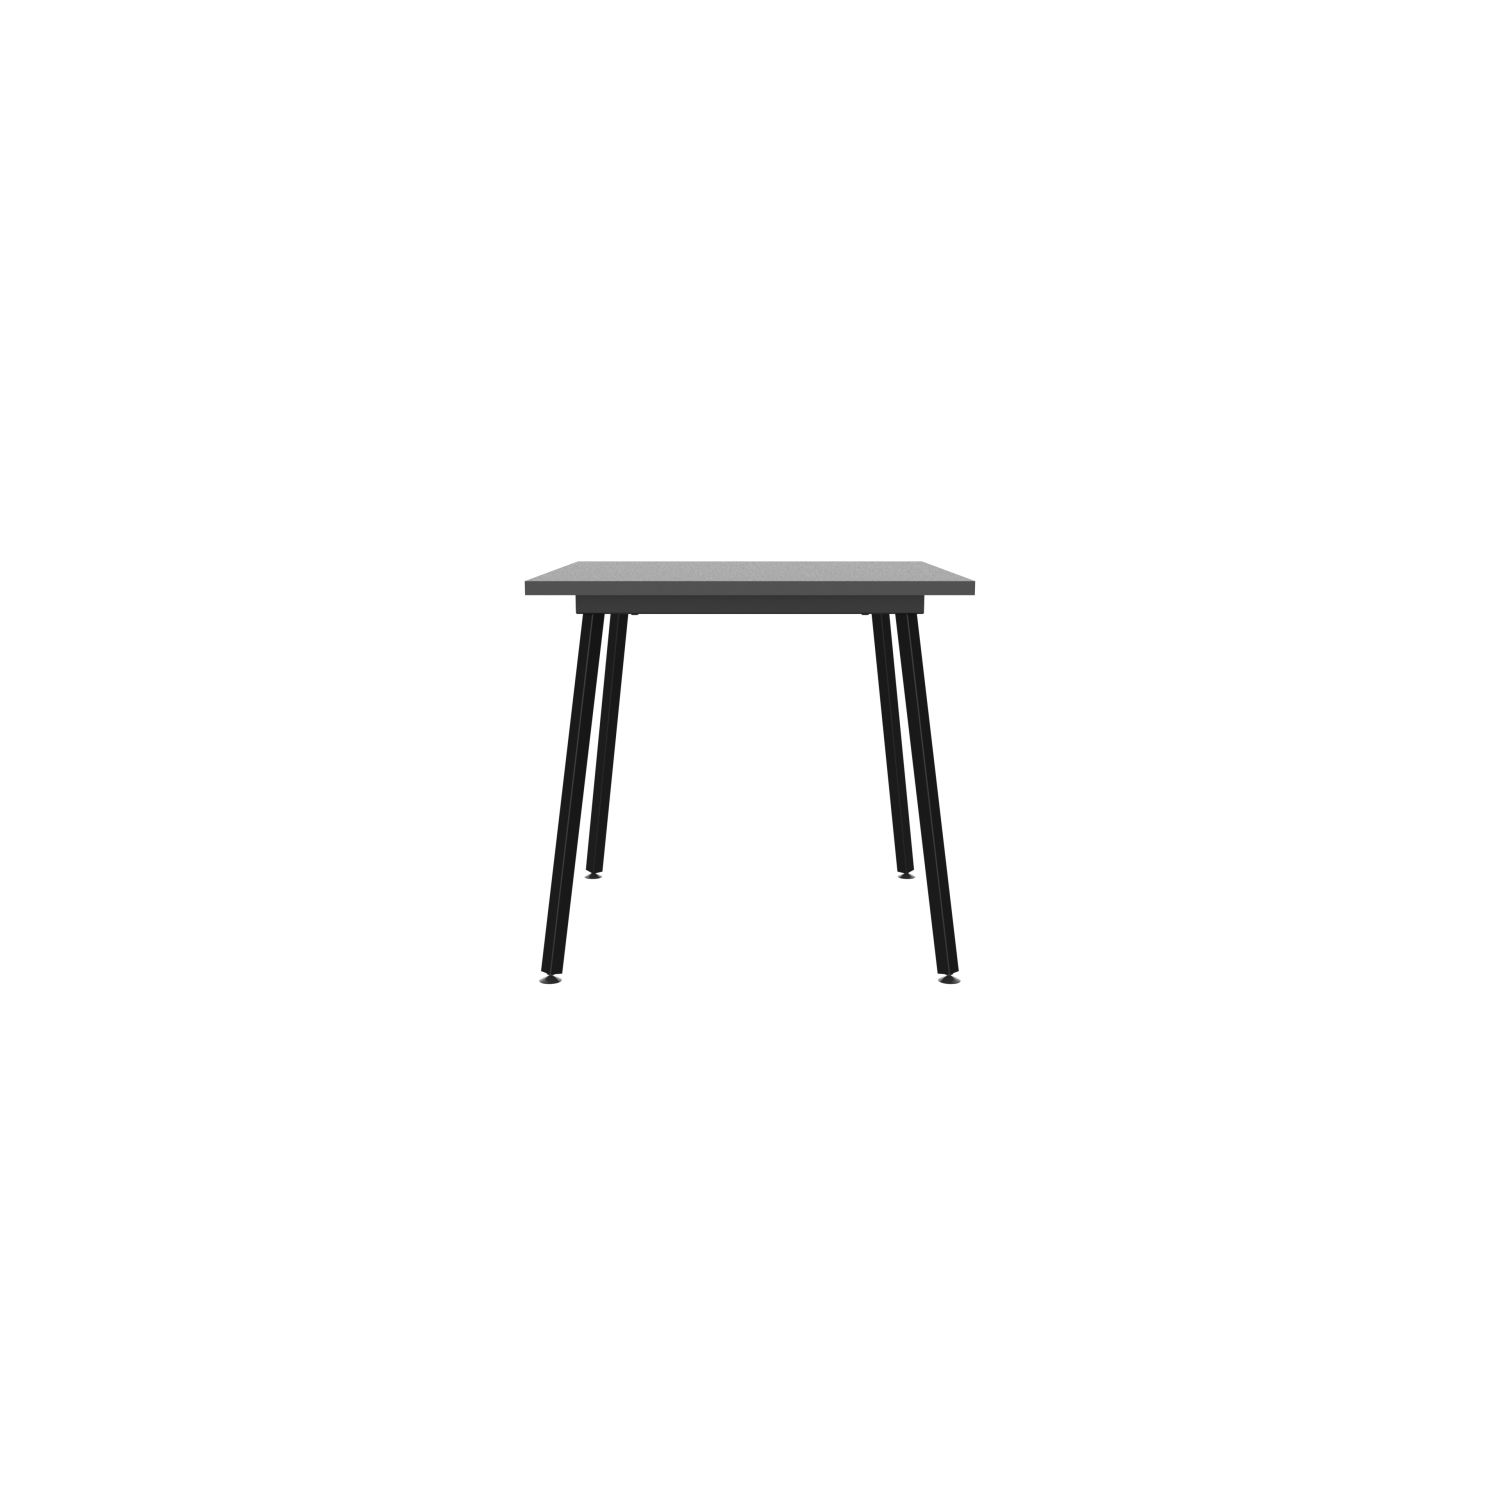 lensvelt maarten baas table fixed height 80x80 table top 26 mm top melamine black edge abs black black frame ral9005